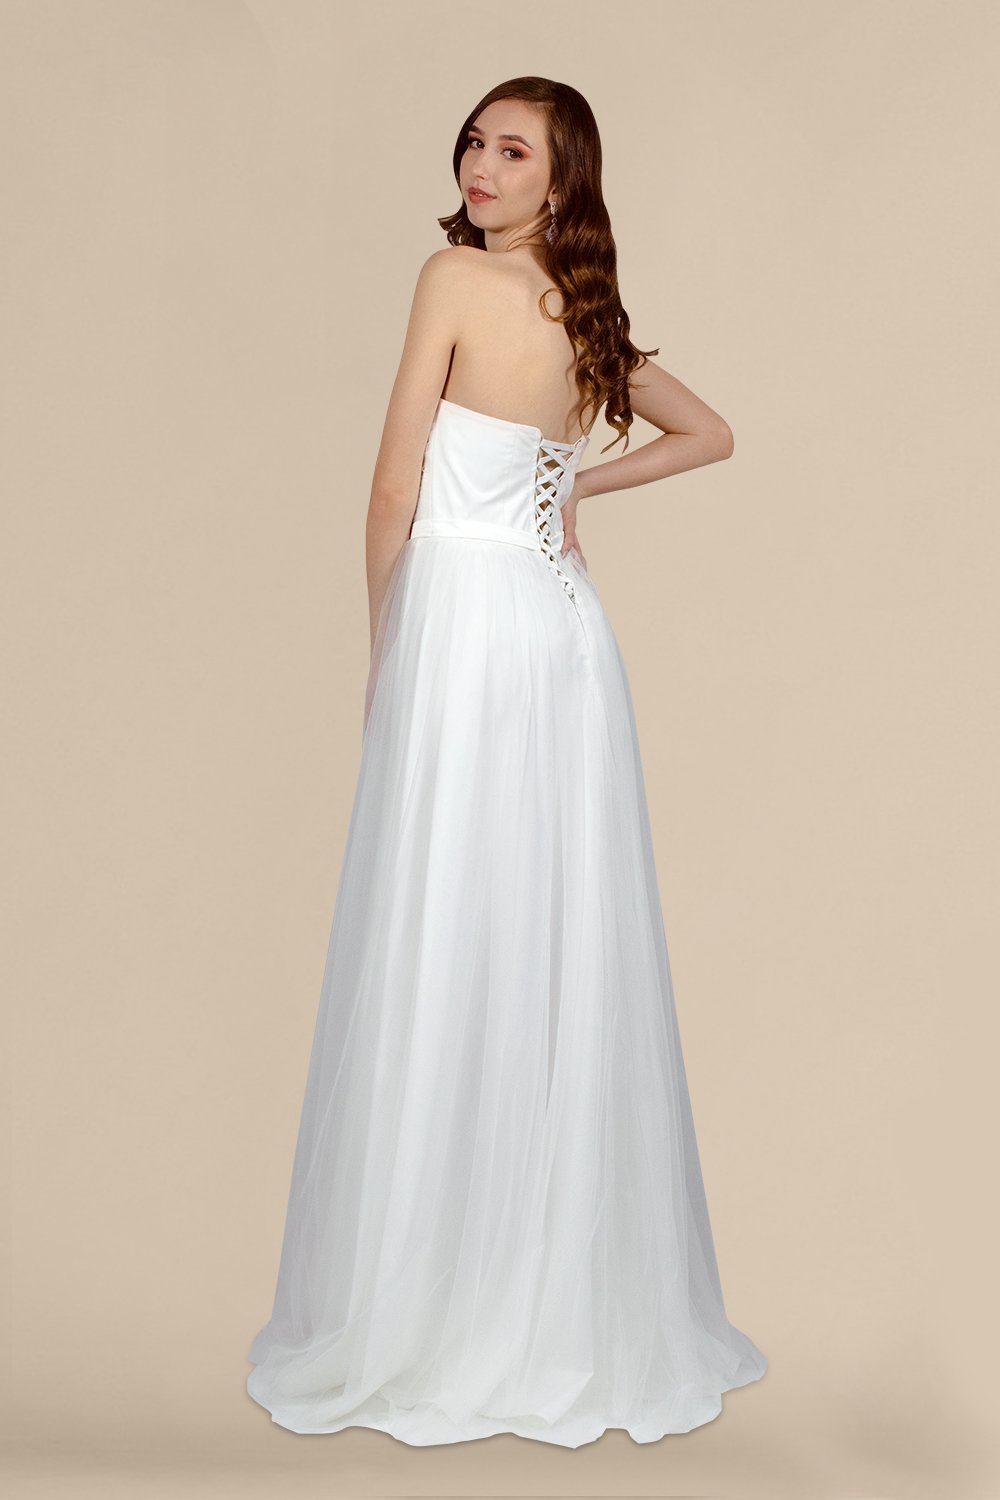 simple wedding dresses perth australia custom made bridal envious bridal & formal